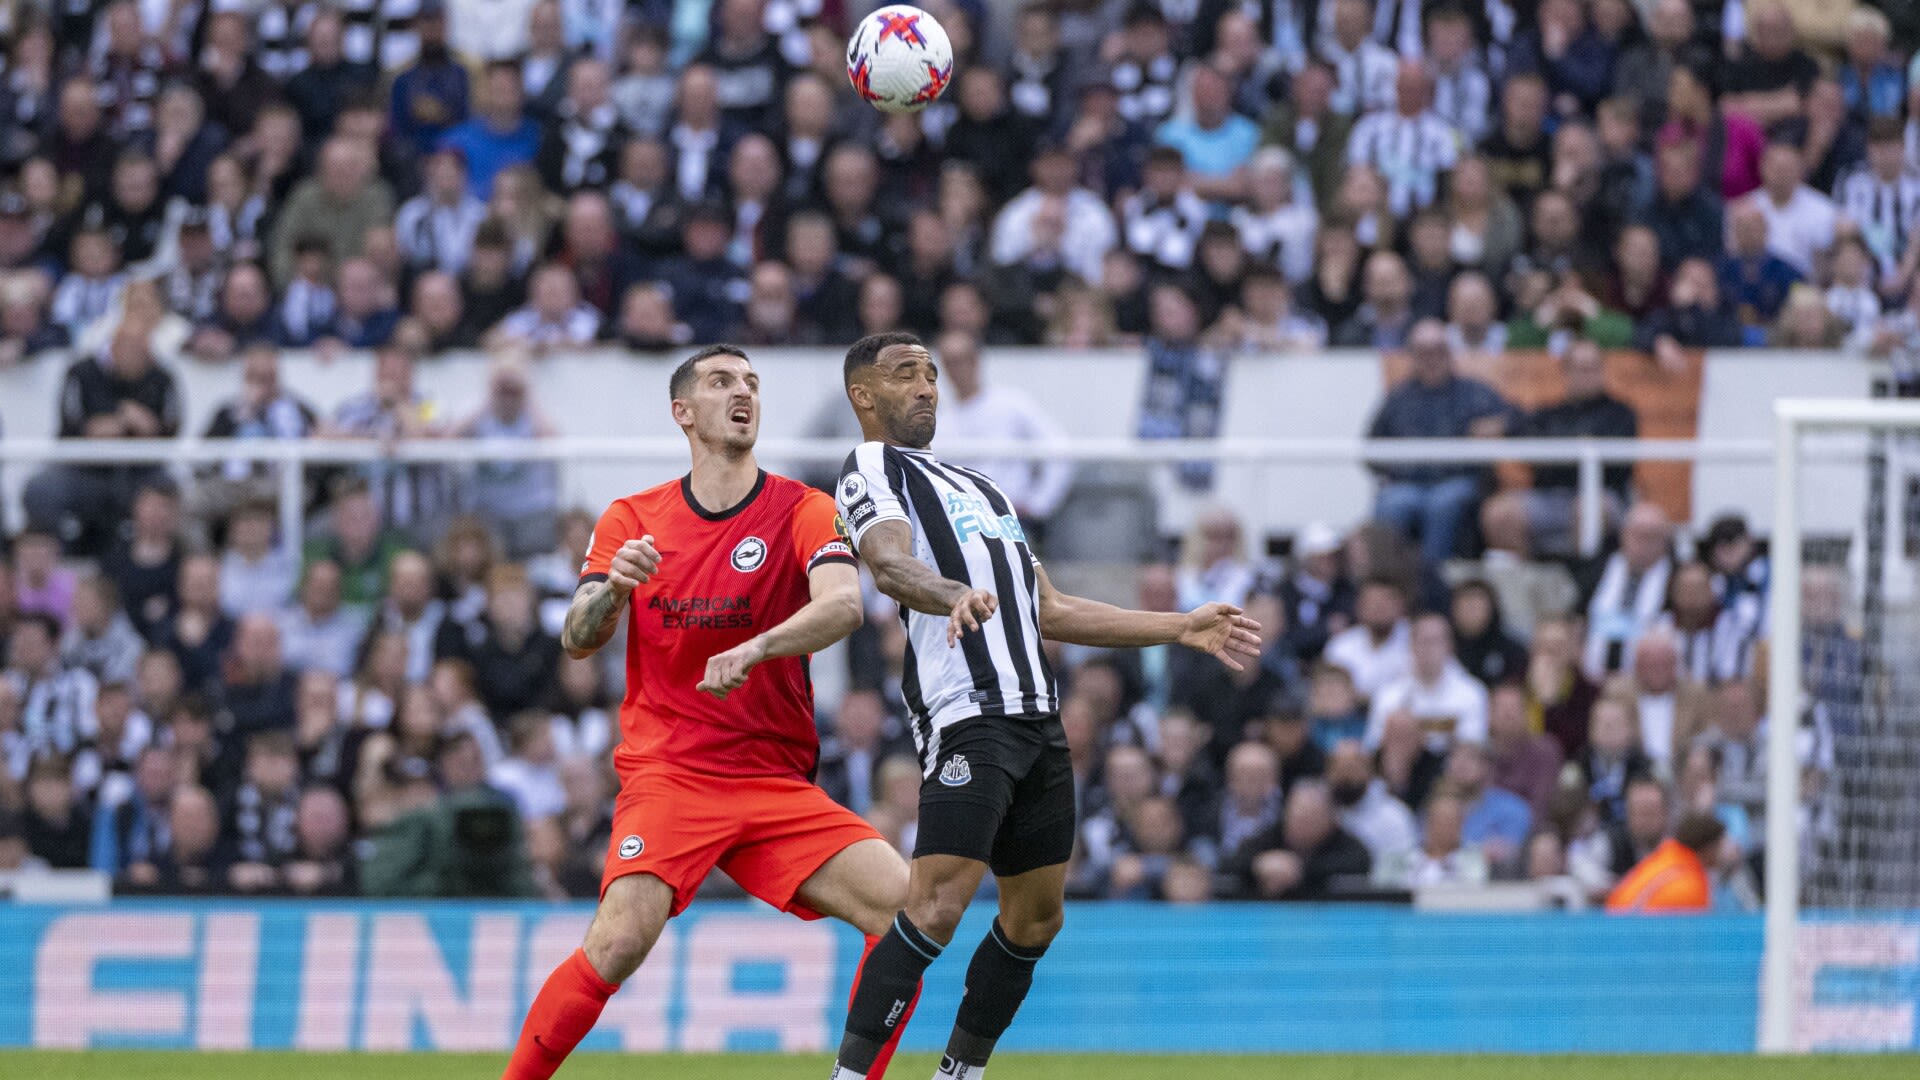 Newcastle vs Brighton: How to watch live, stream link, team news